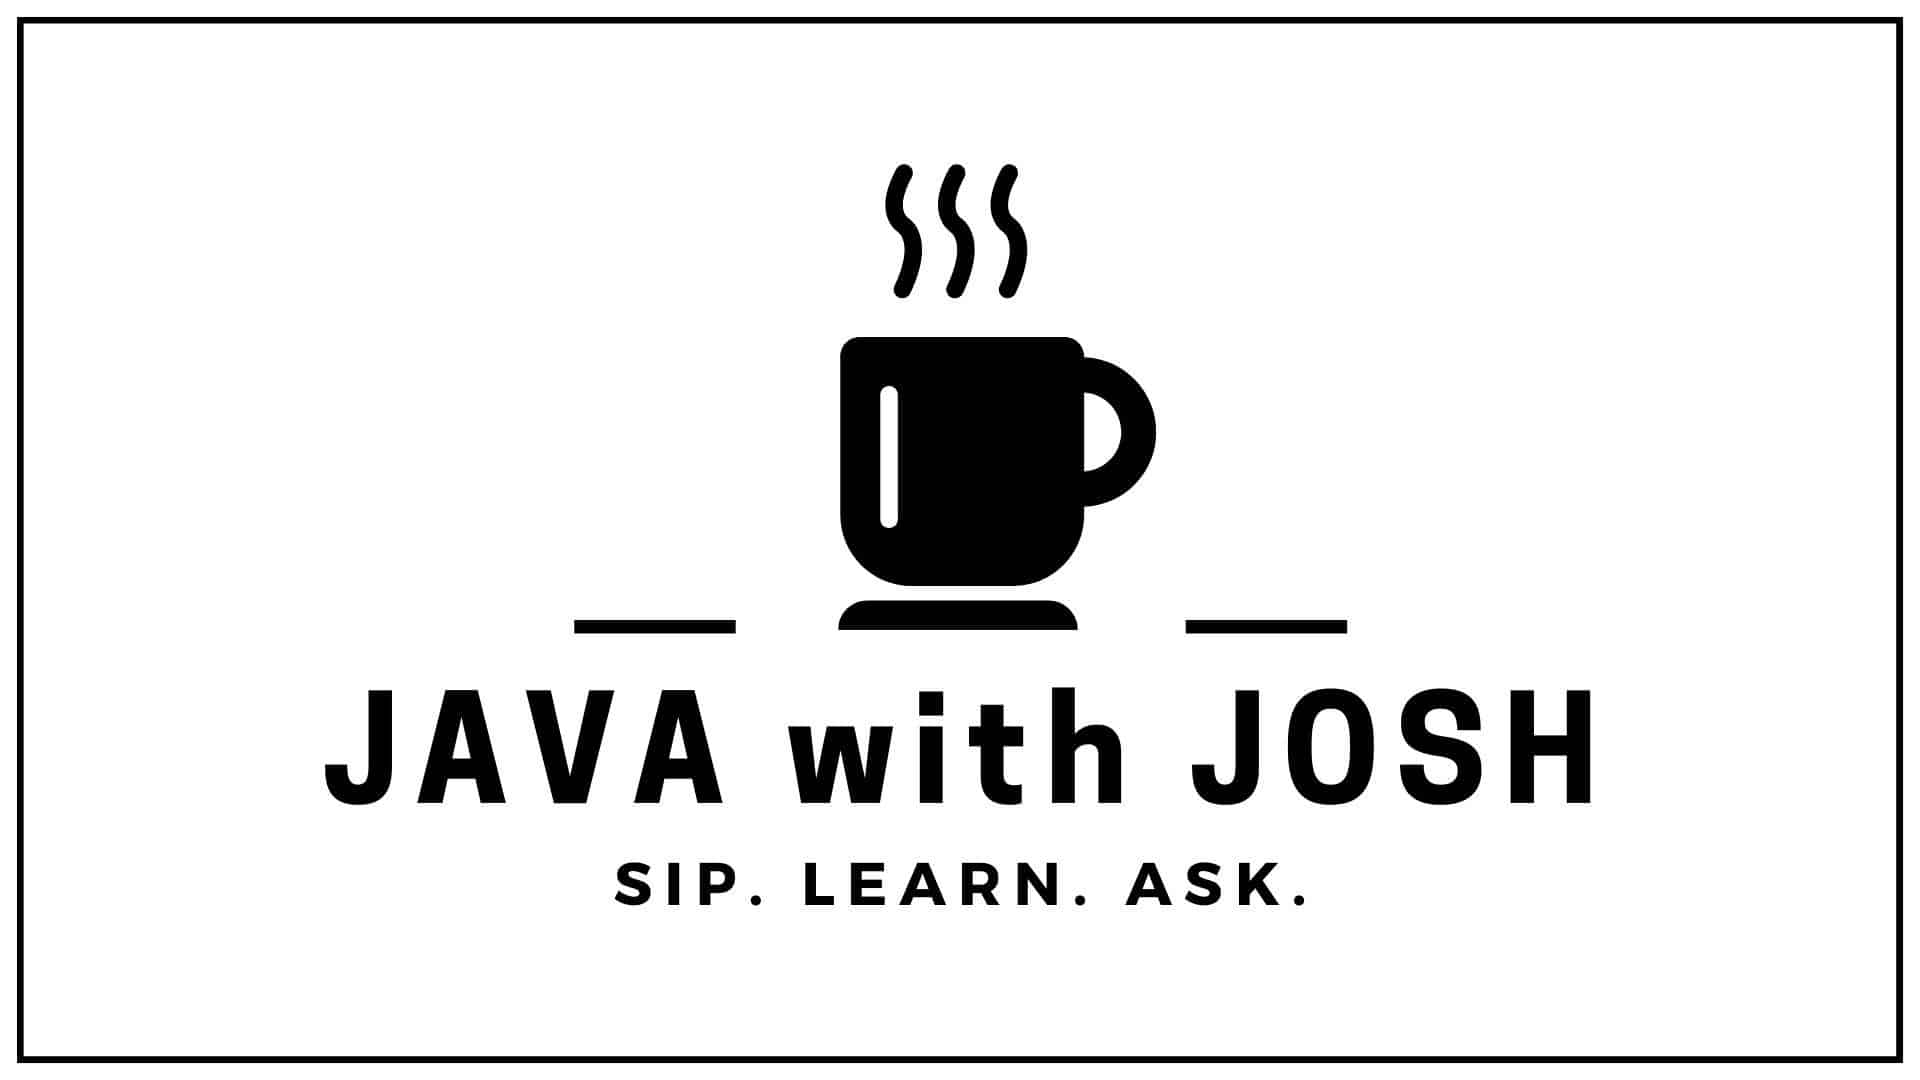 Java with Josh logo